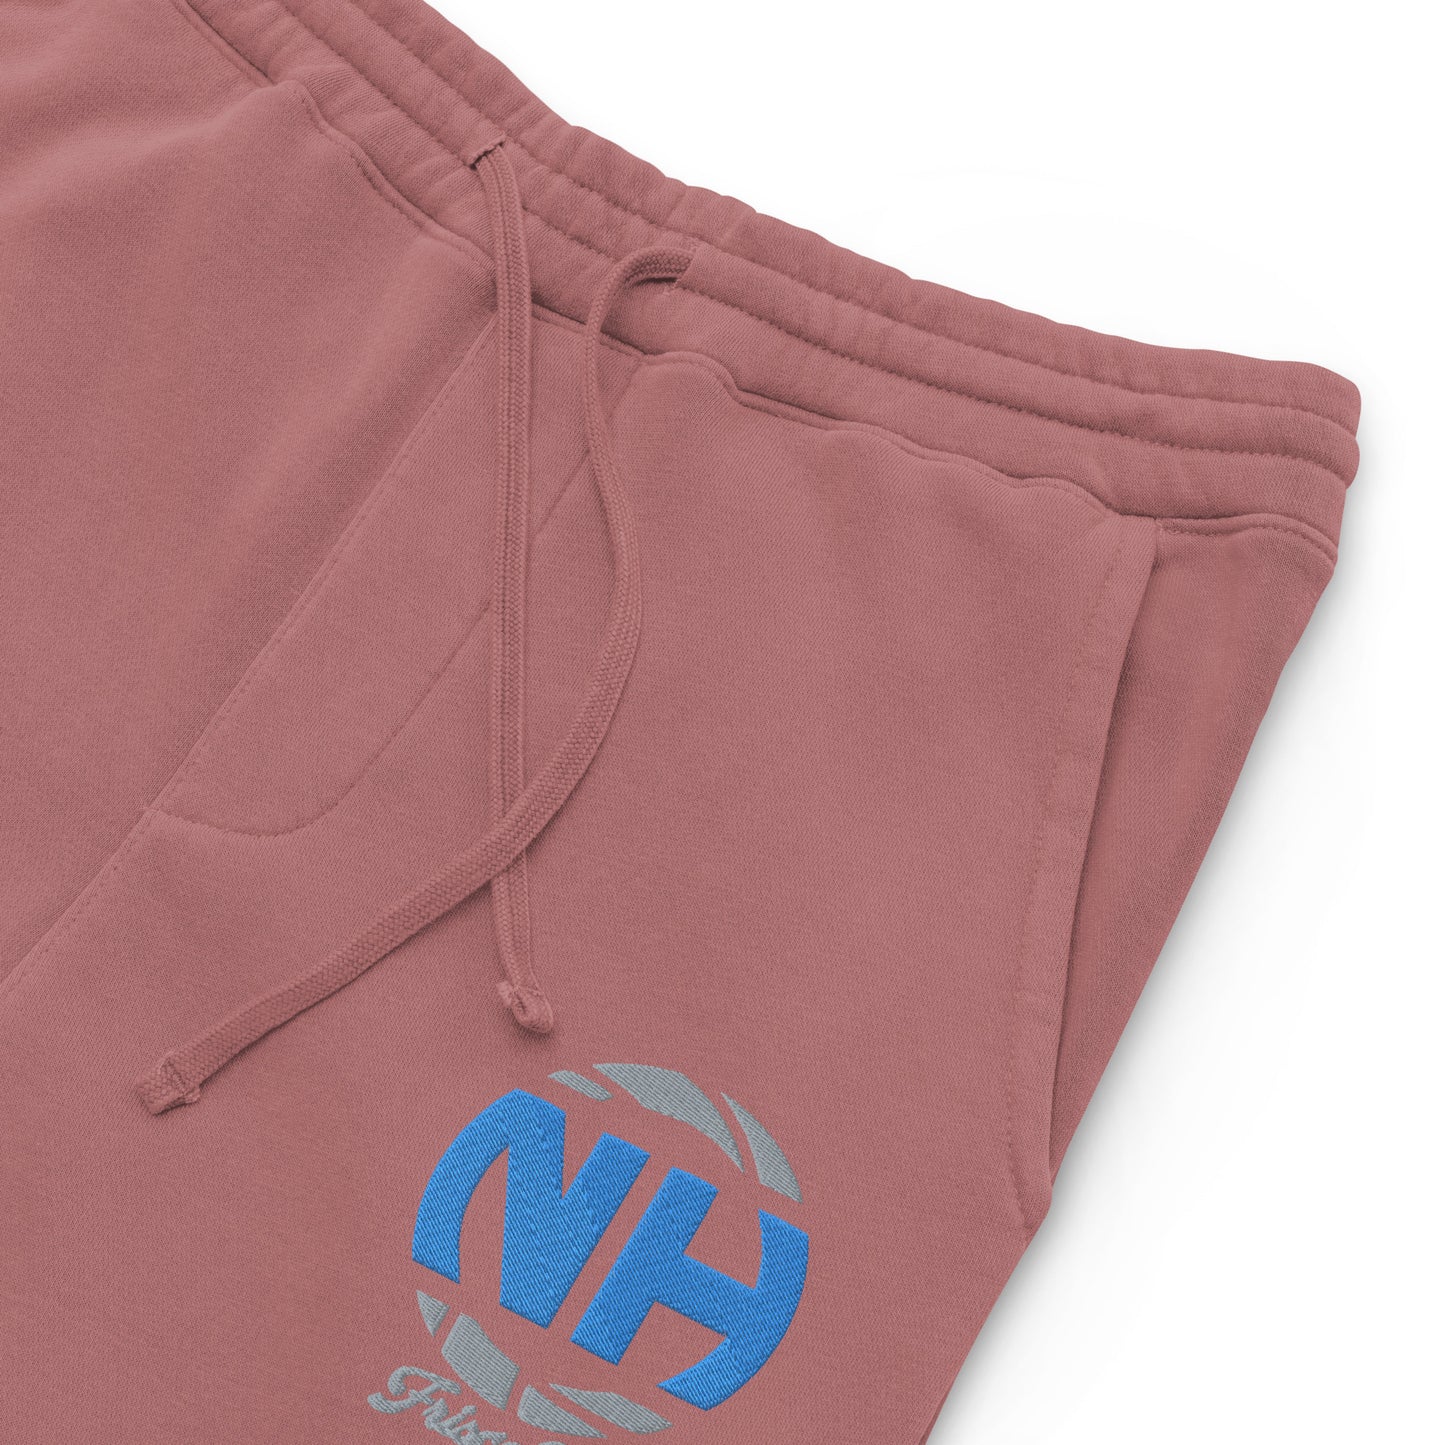 NH Unisex Pigment-Dyed Sweatpants